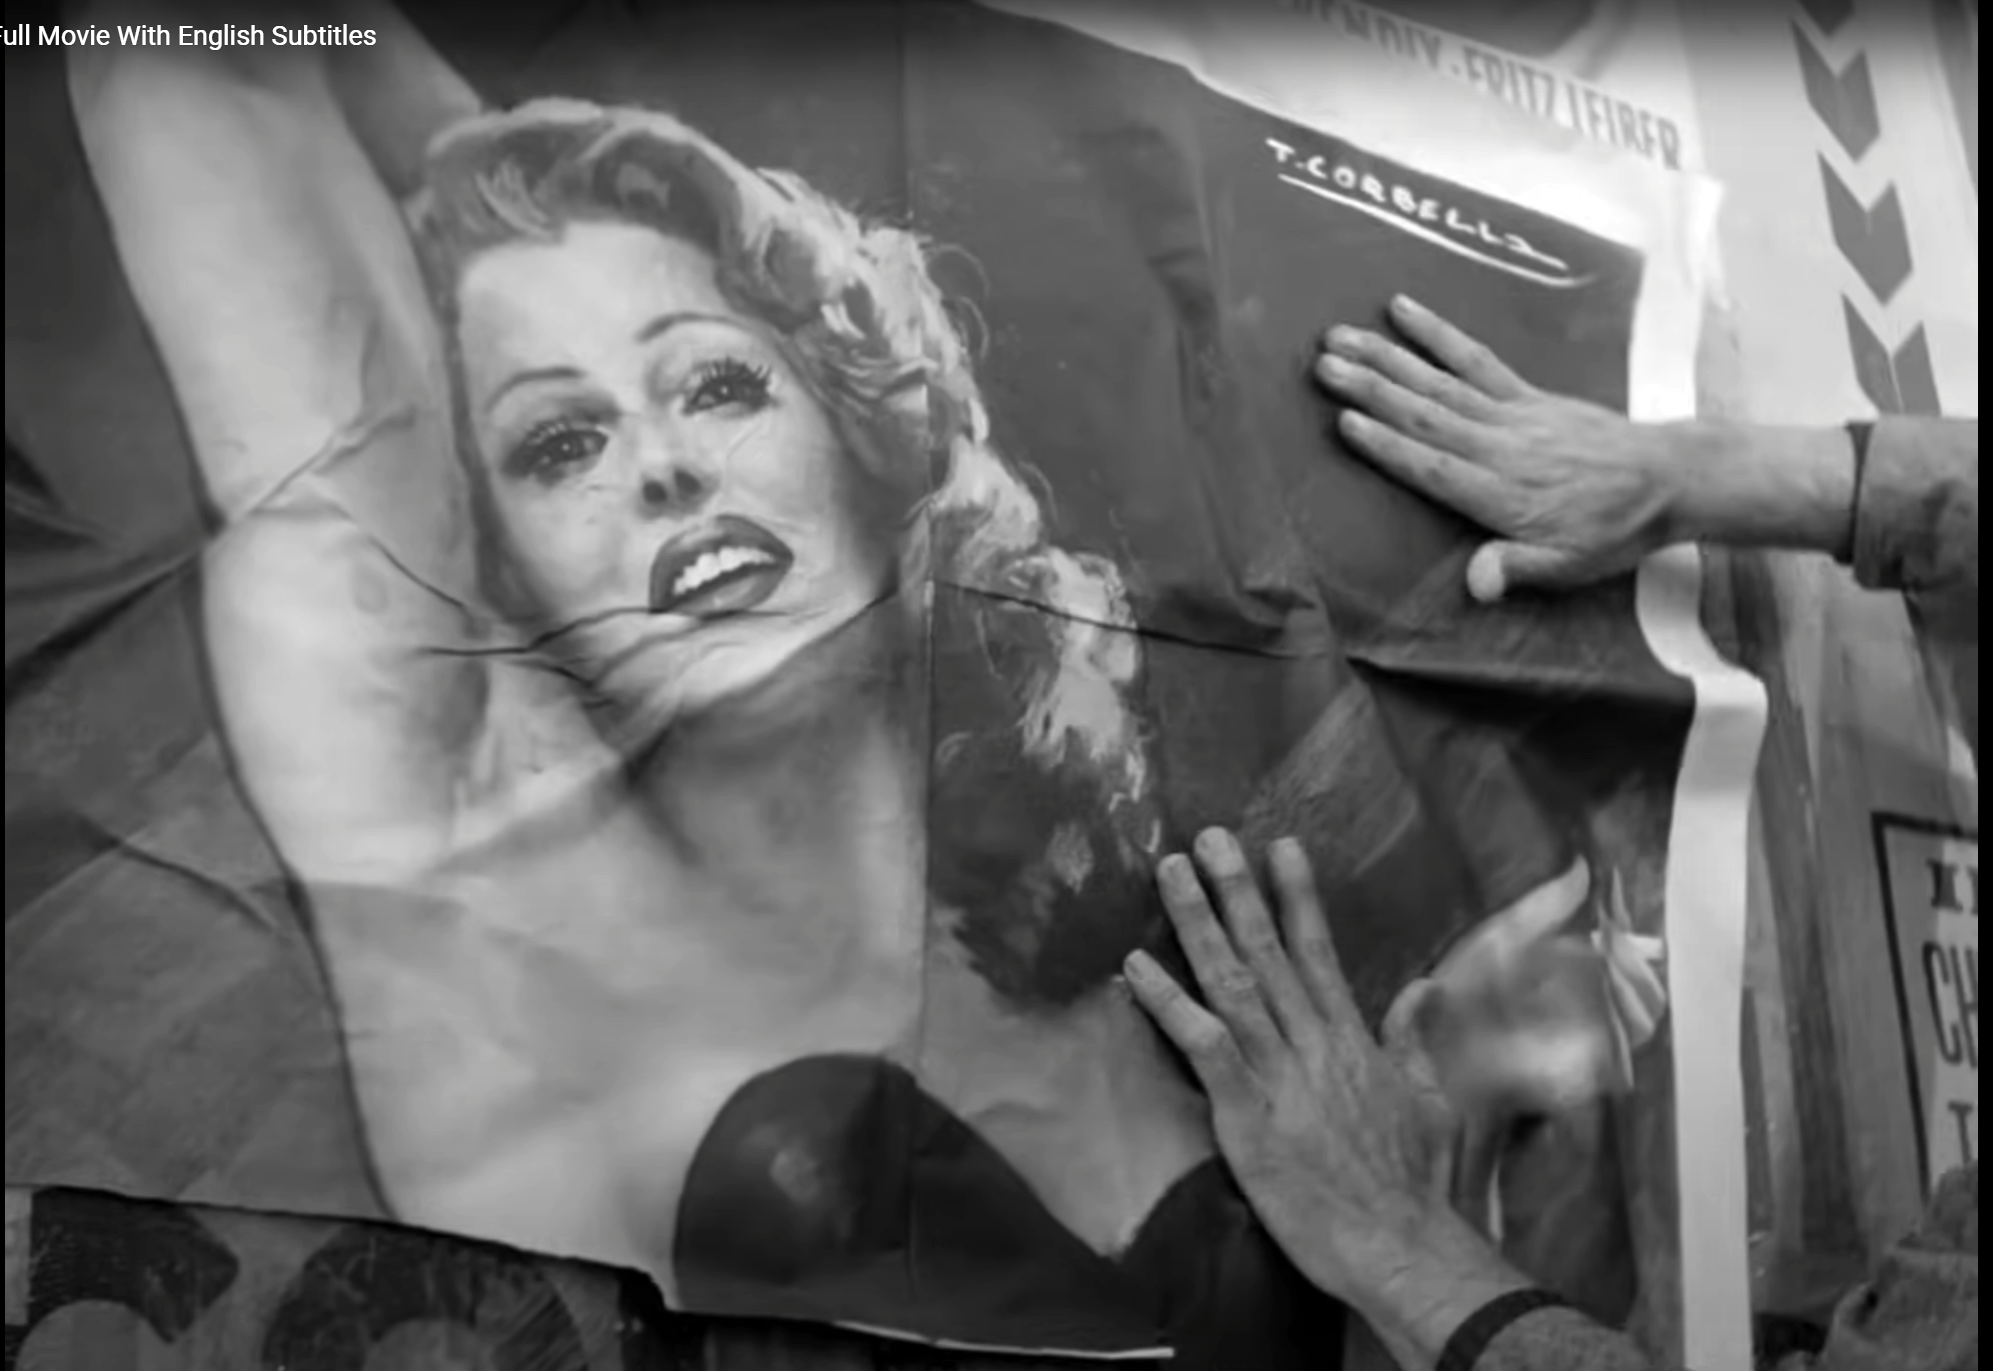 Antonio Ricci puts up a poster of Rita Hayworth